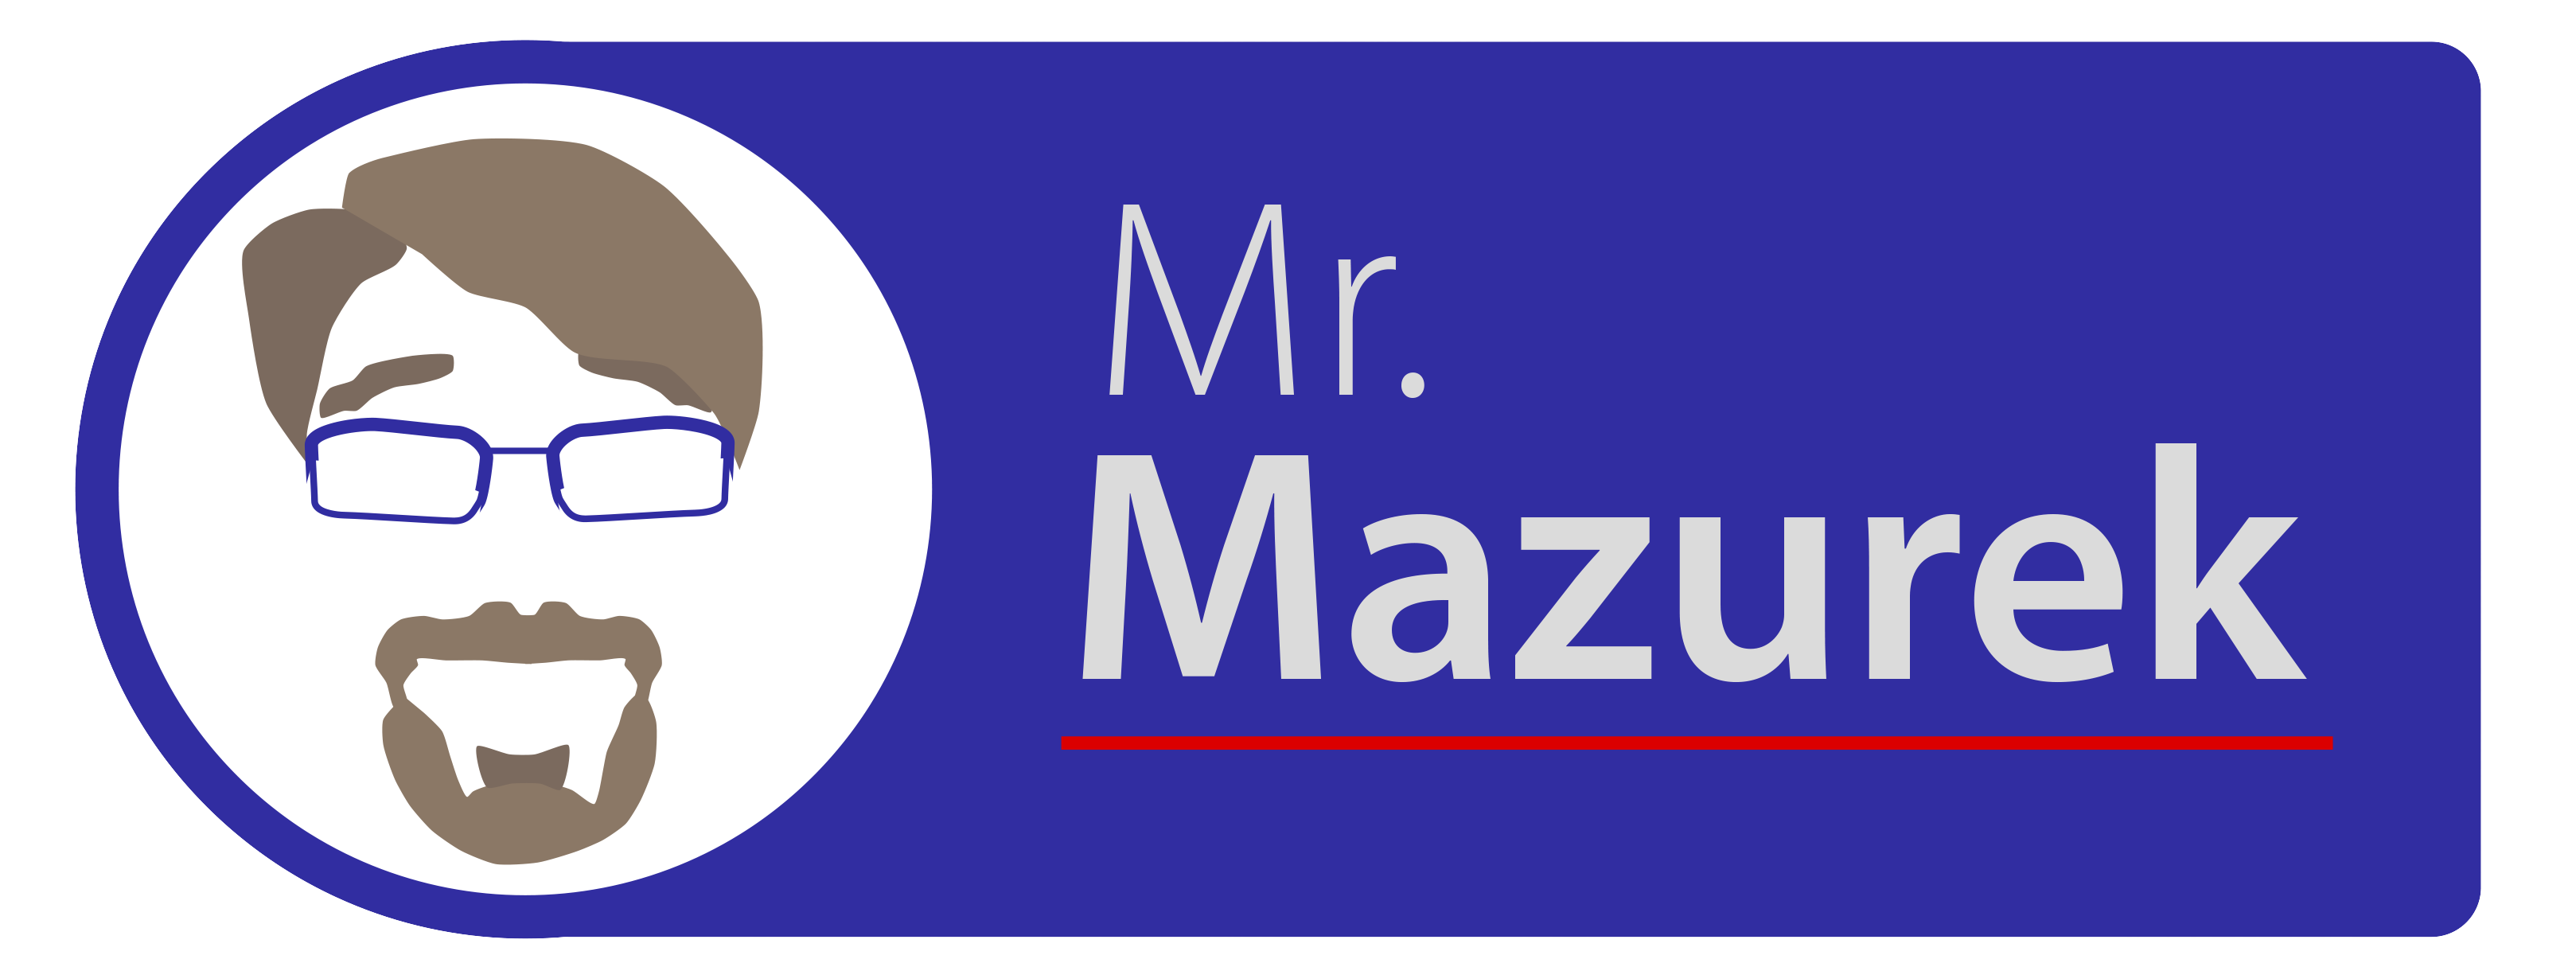 Mr. Mazurek